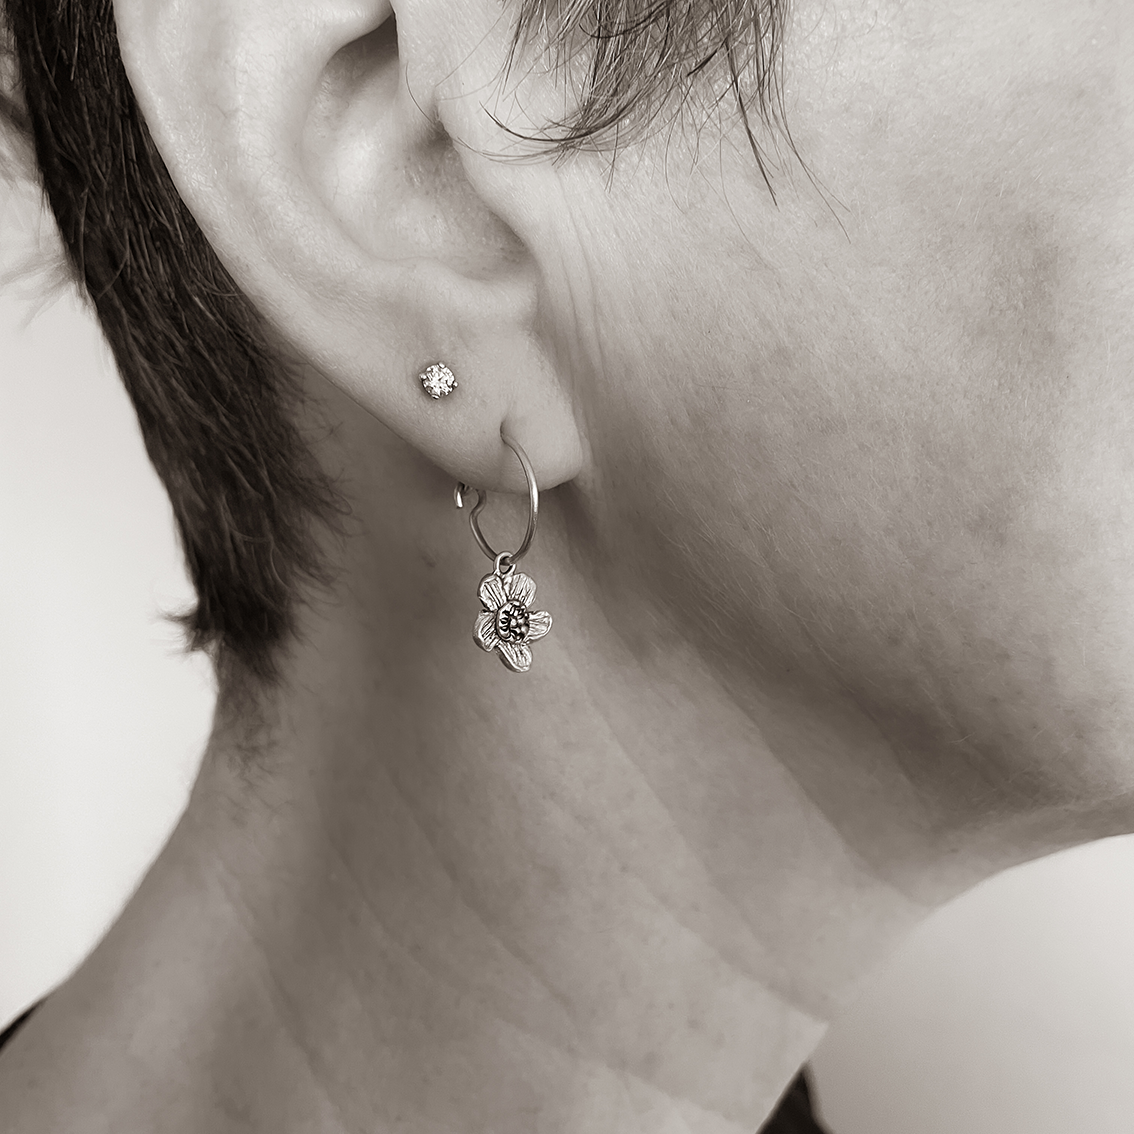 Hoop Earrings with Charms | Alpine Daisy Charms